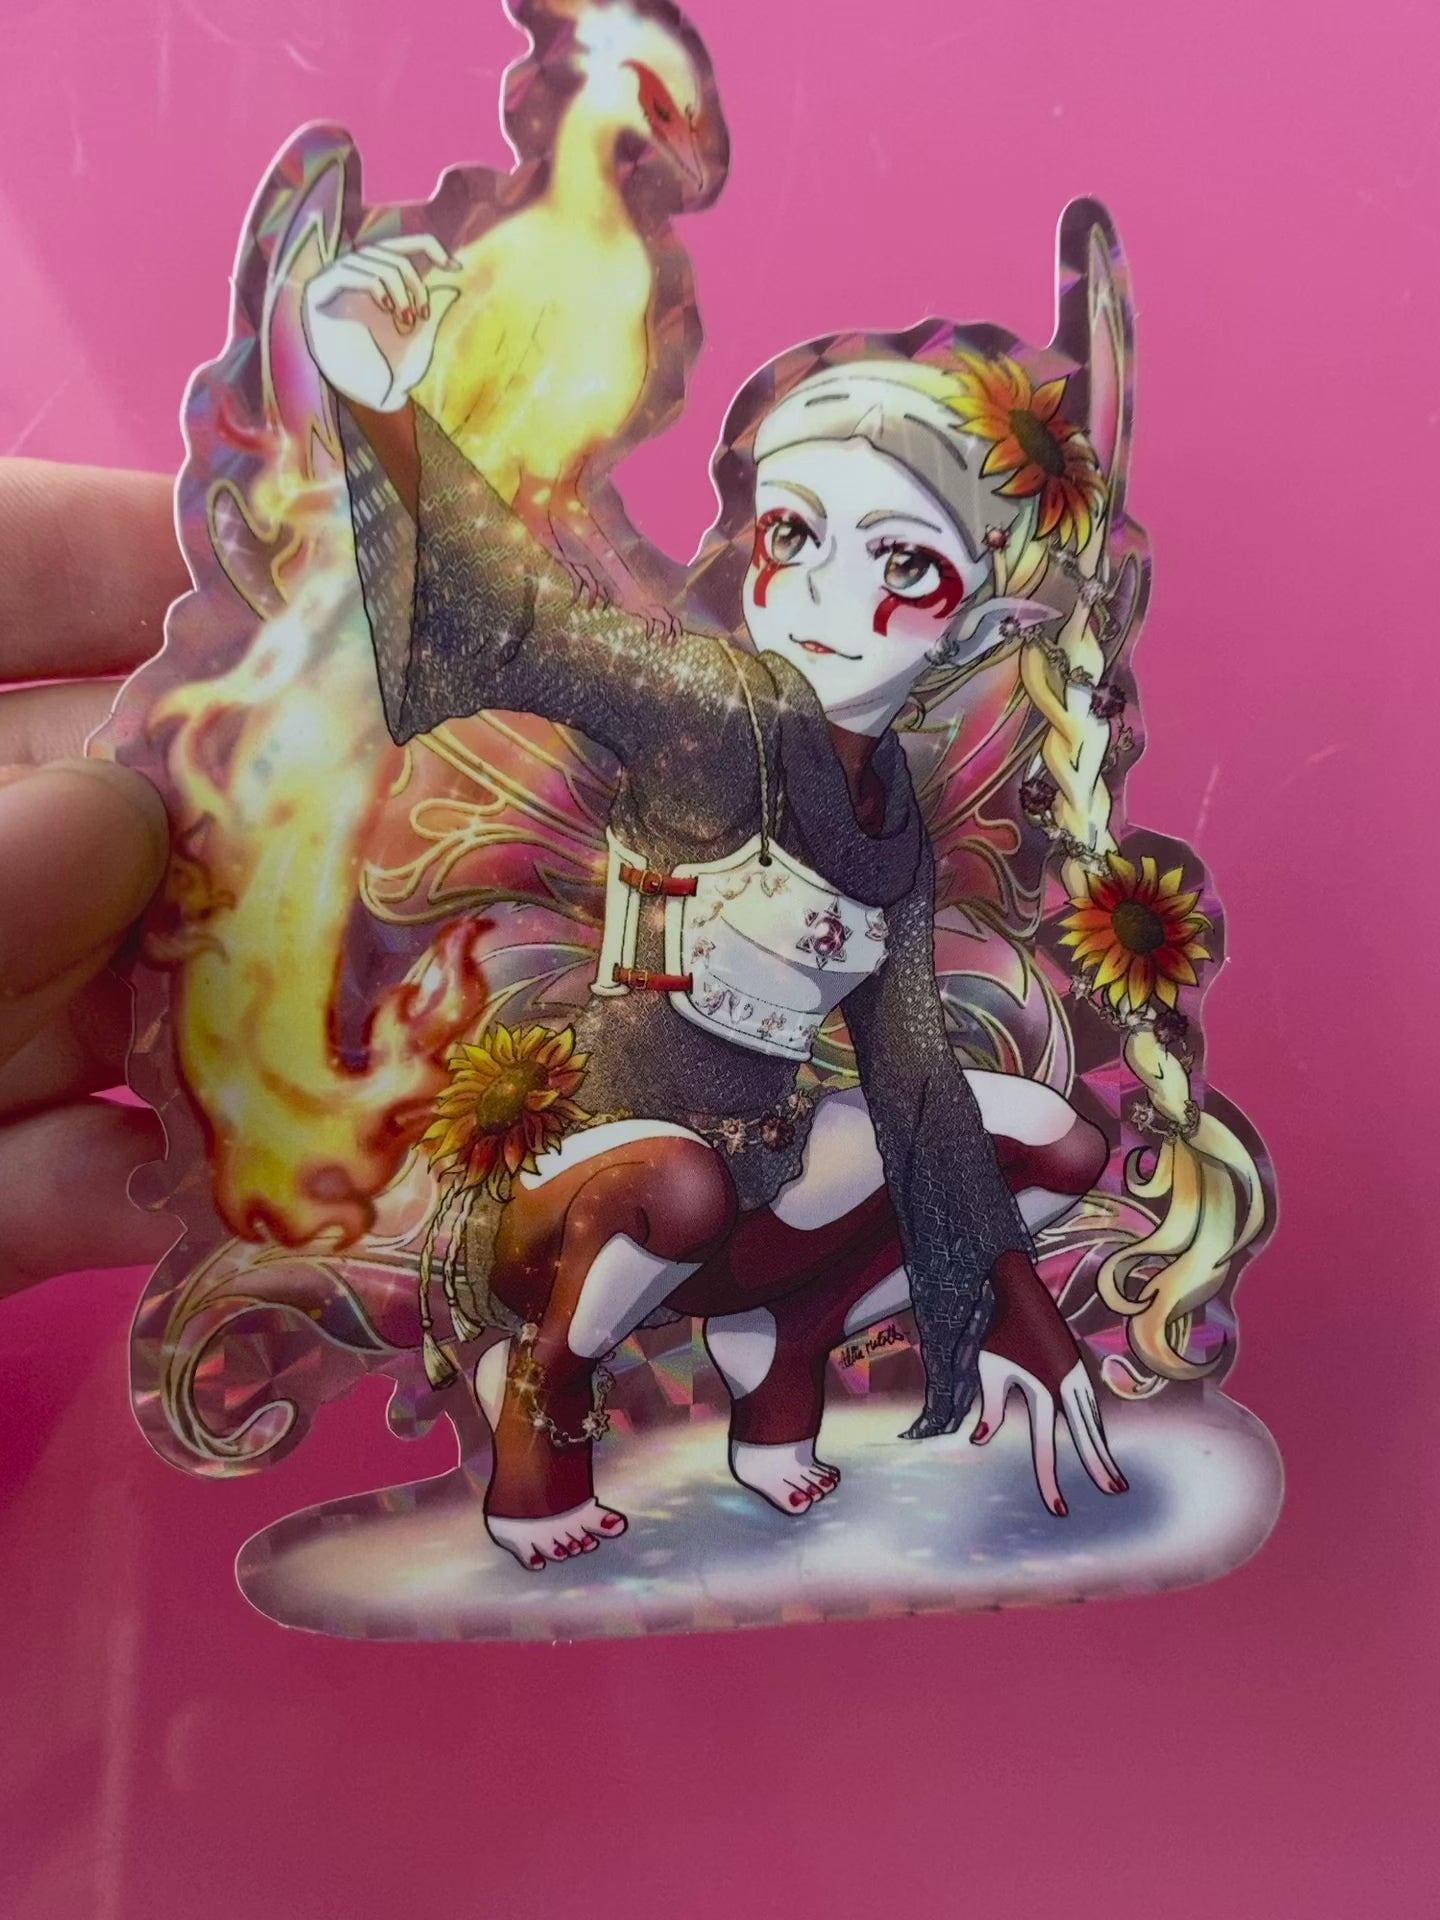 large 5 x 4 Holographic vinyl sticker - Garnet January phoenix sunflower armor gemstone birthstone farie fantasy manga anime art